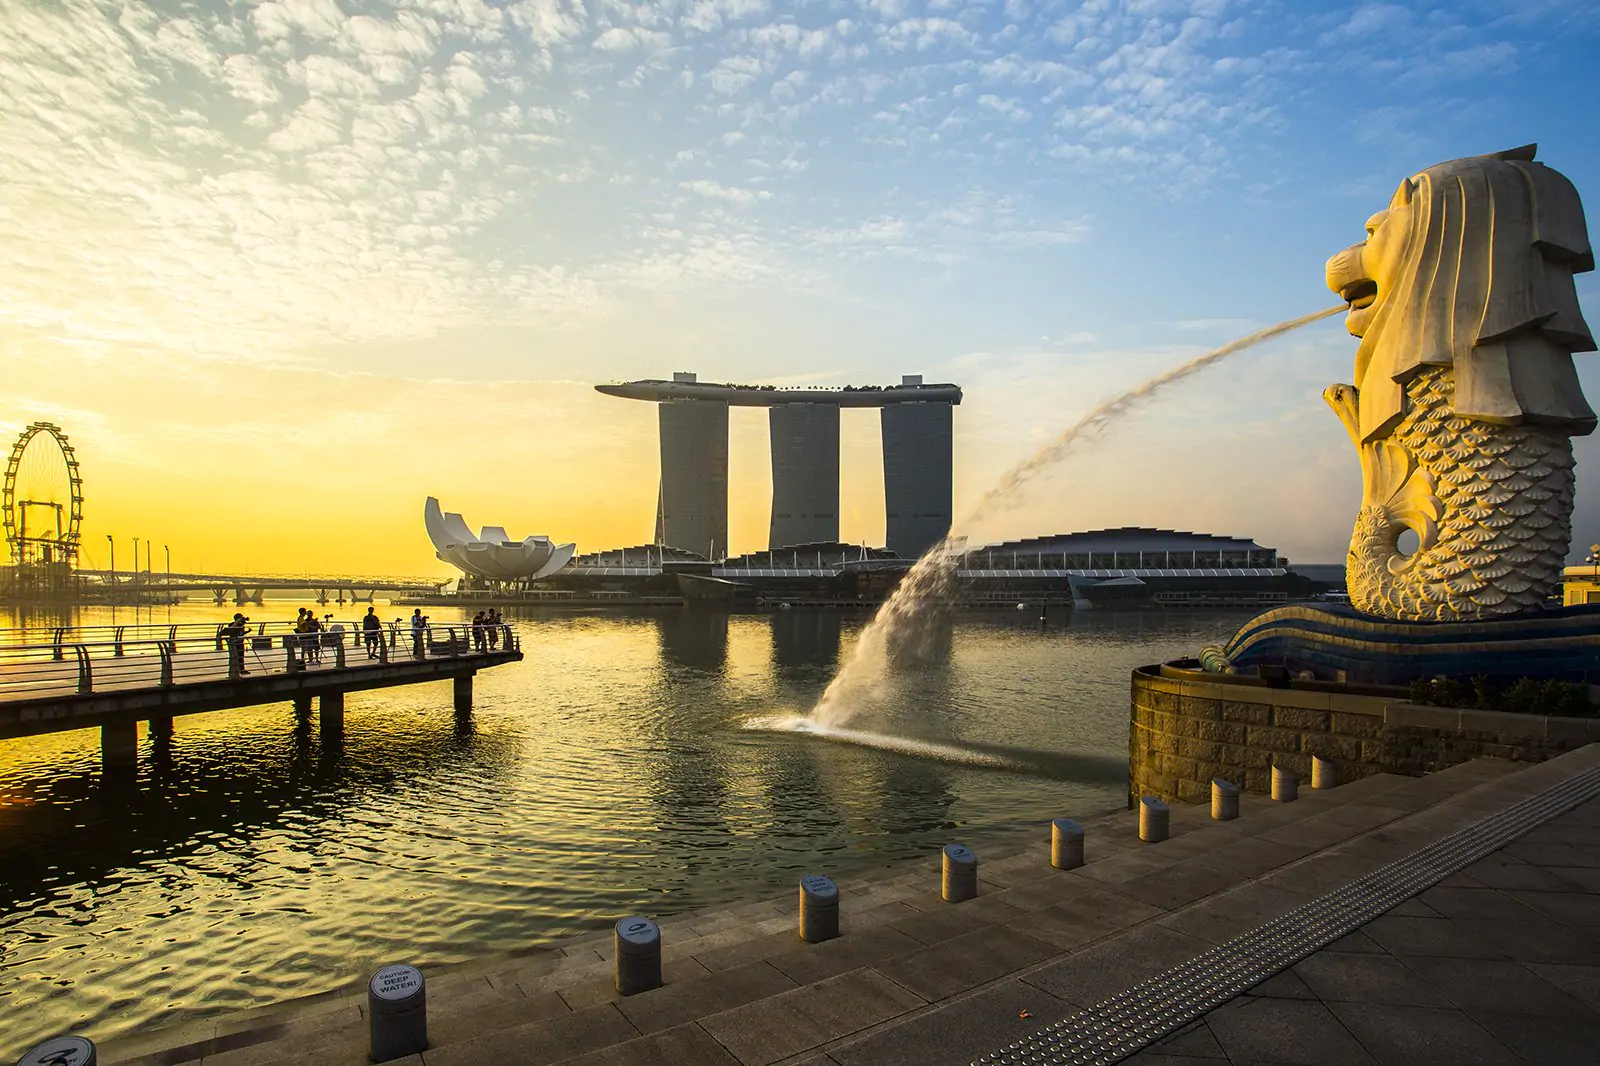 Singapore The Melting Pot Of Asia